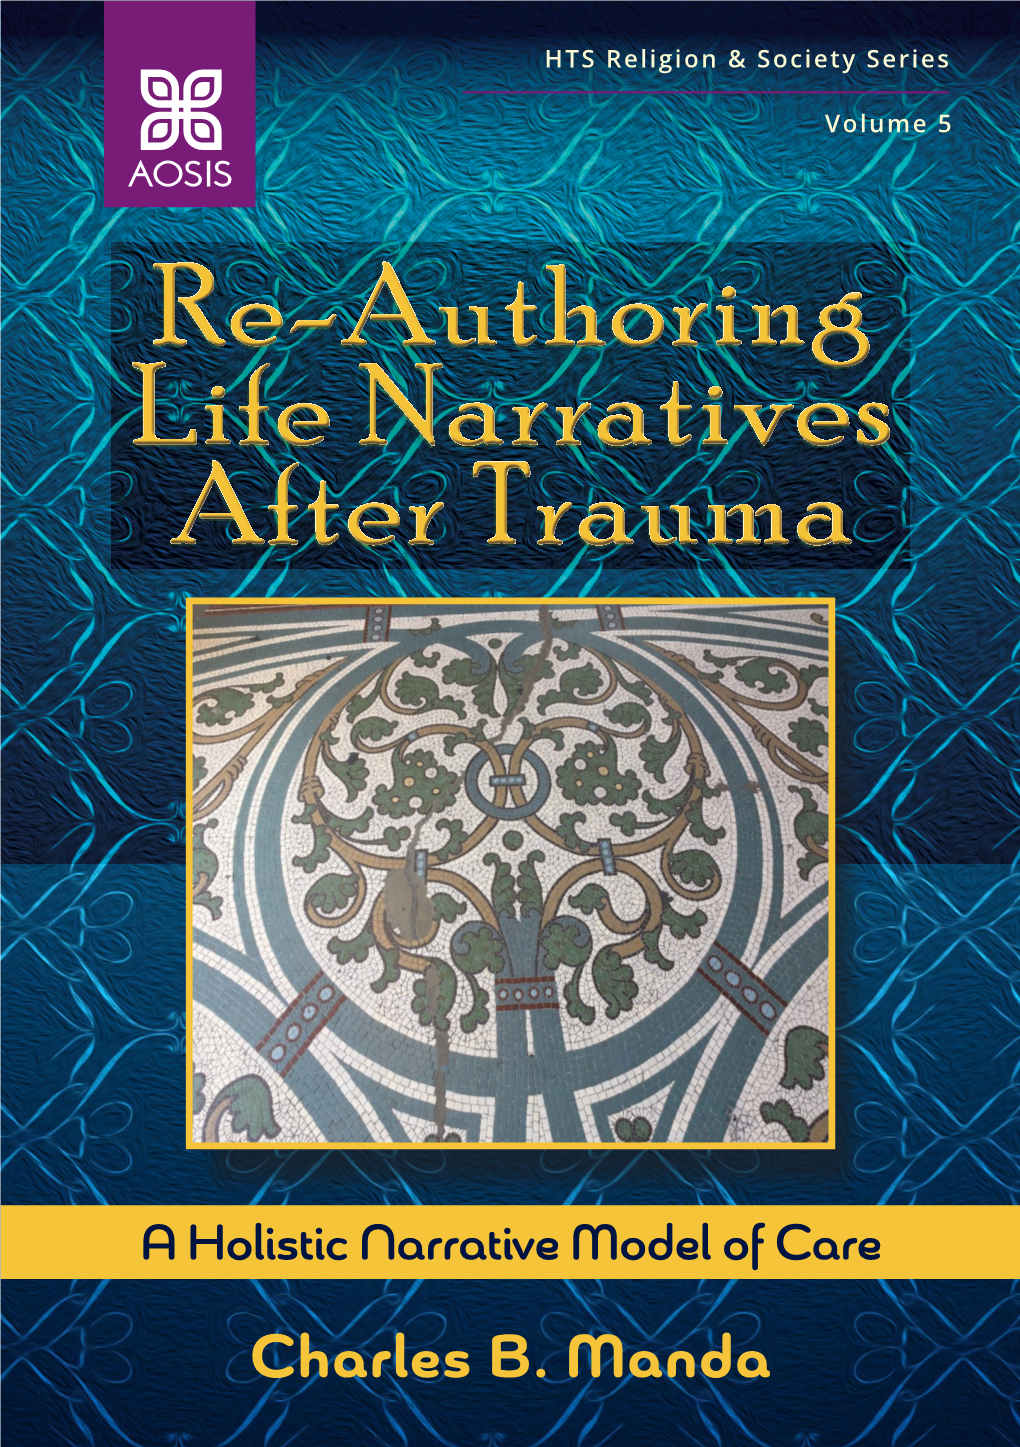 Re-Authoring Life Narratives After Trauma